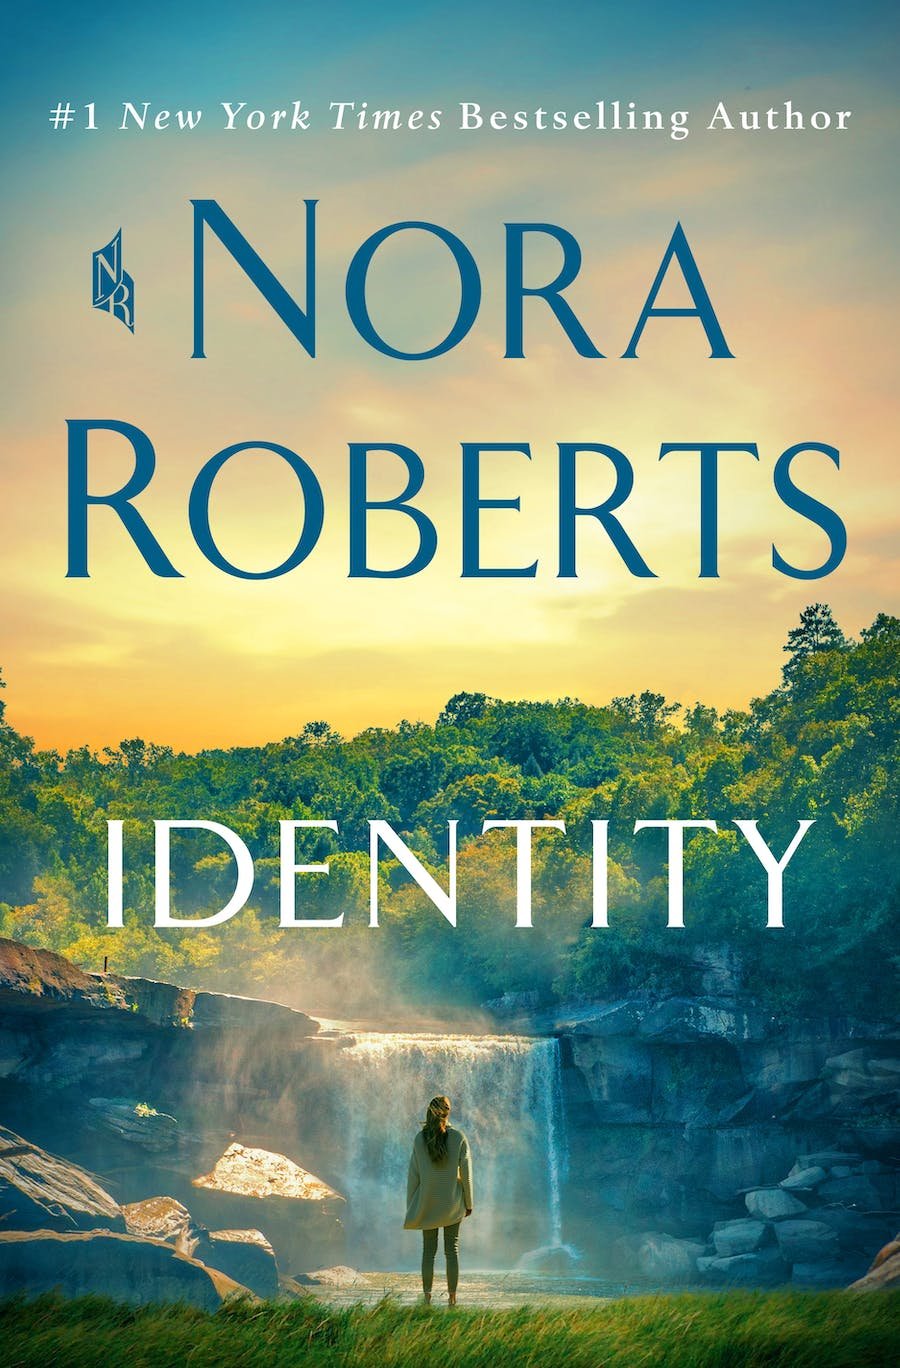 Nora Roberts: Mastering the Art of Romantic Suspense